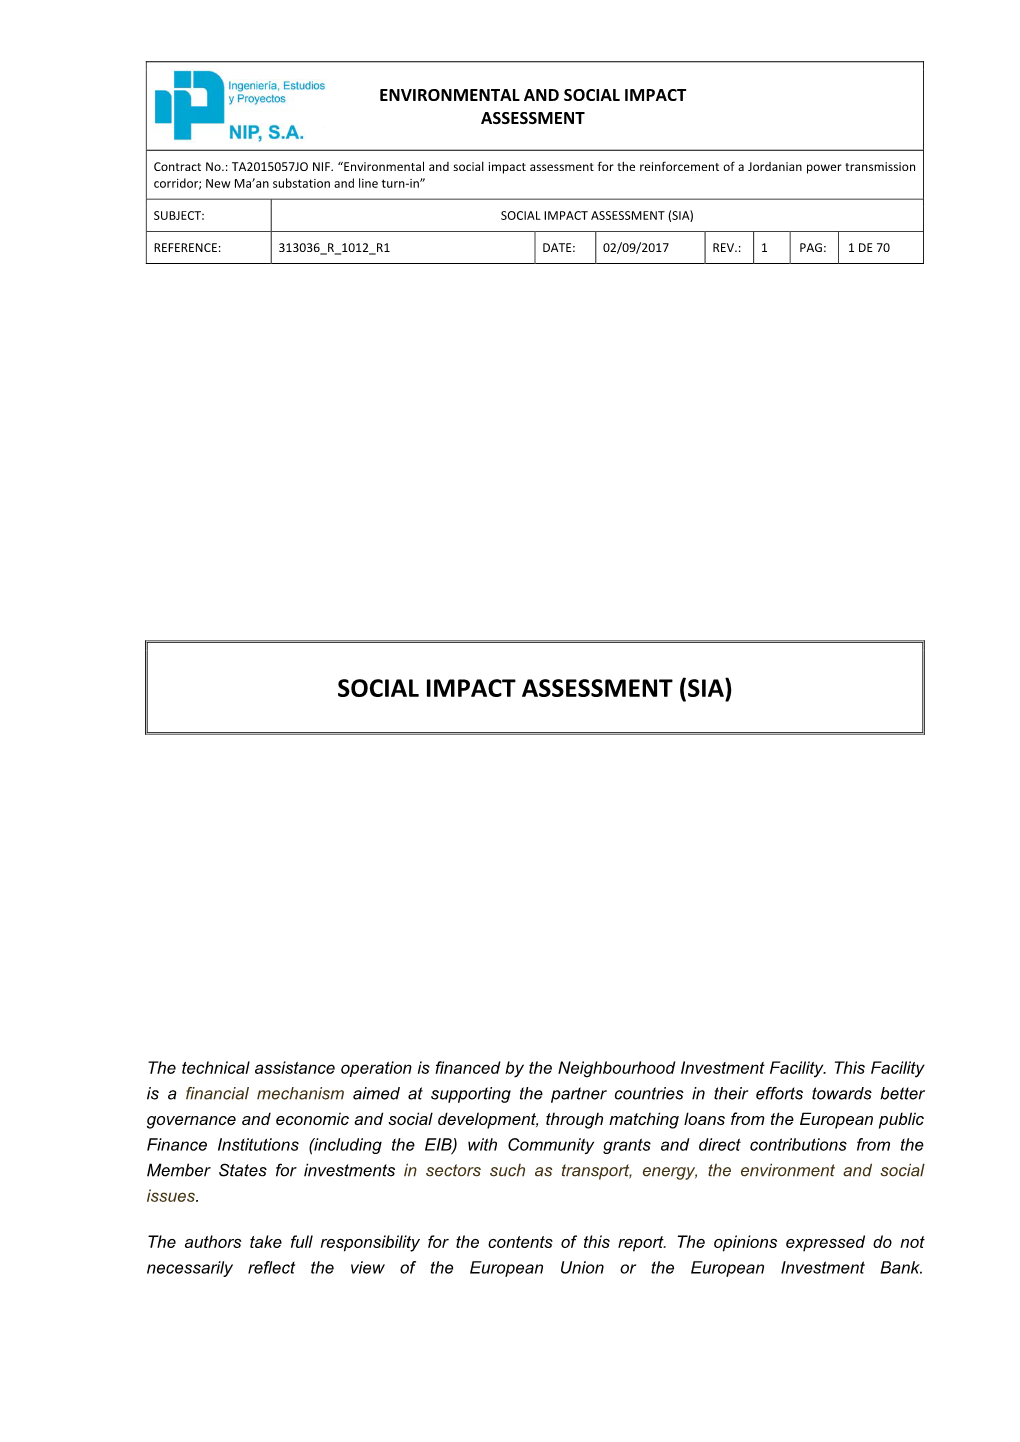 Social Impact Assessment (Sia)